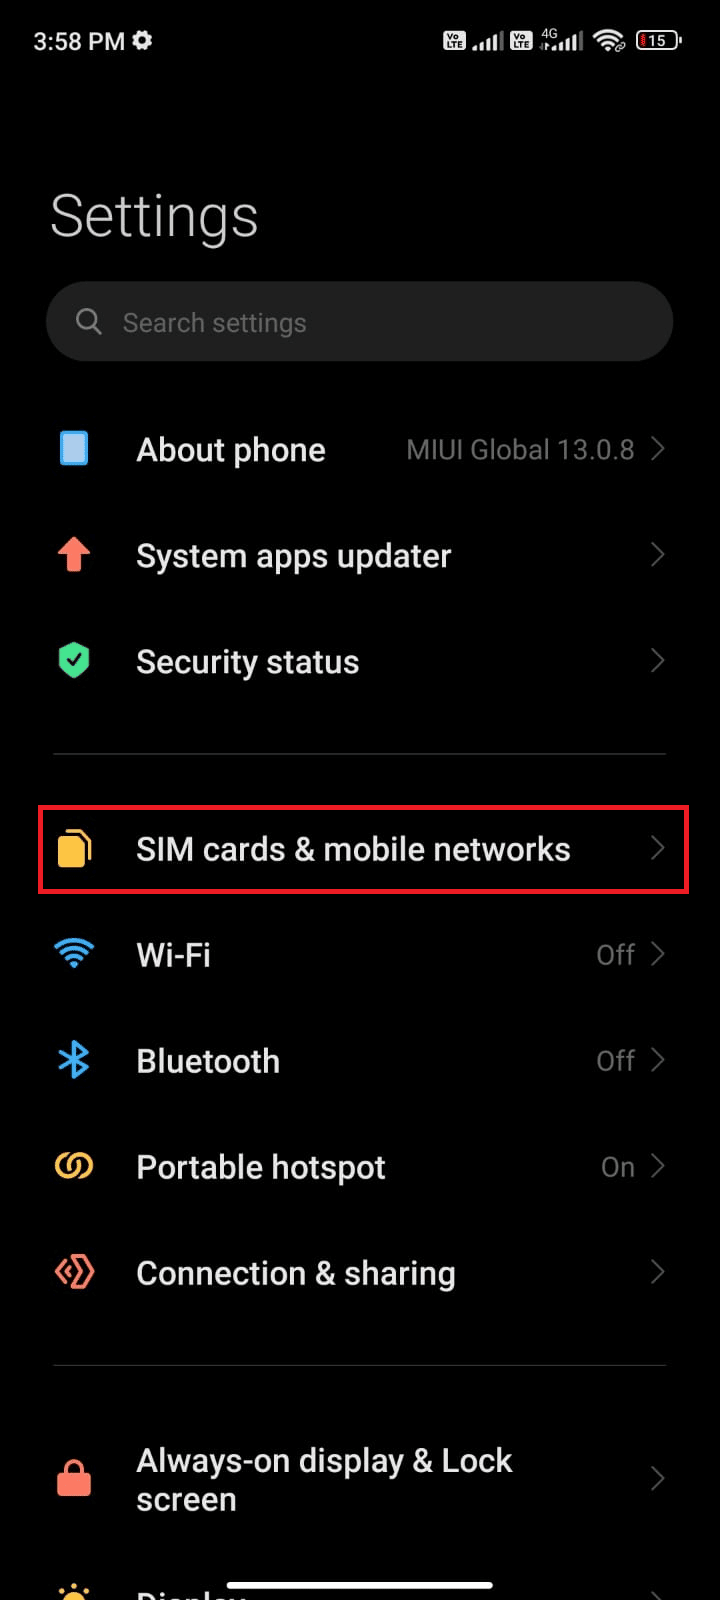 SIM કાર્ડ્સ મોબાઇલ નેટવર્ક્સ વિકલ્પને ટેપ કરો